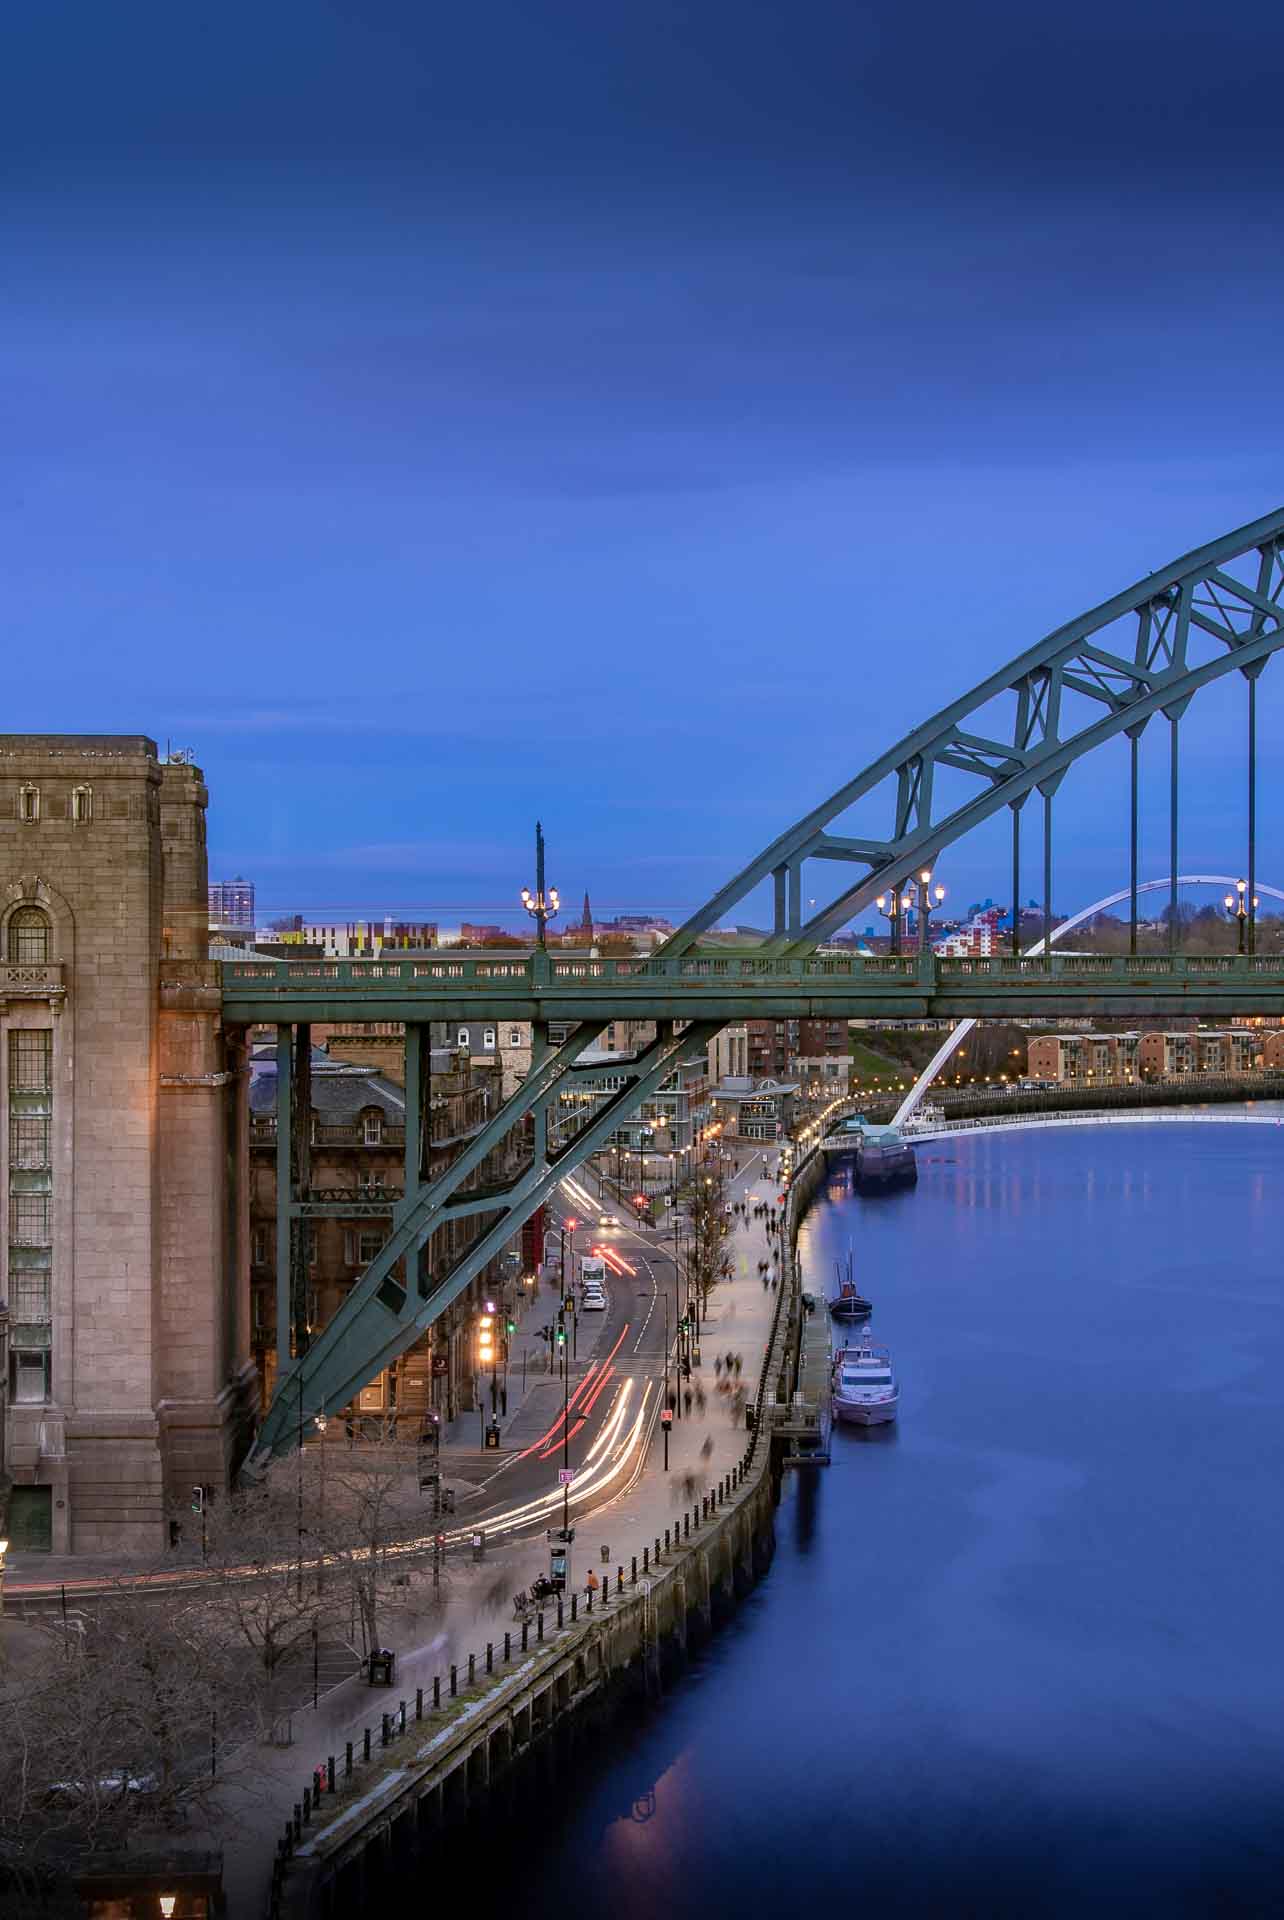 Tyne Bridge with river views in Newcastle